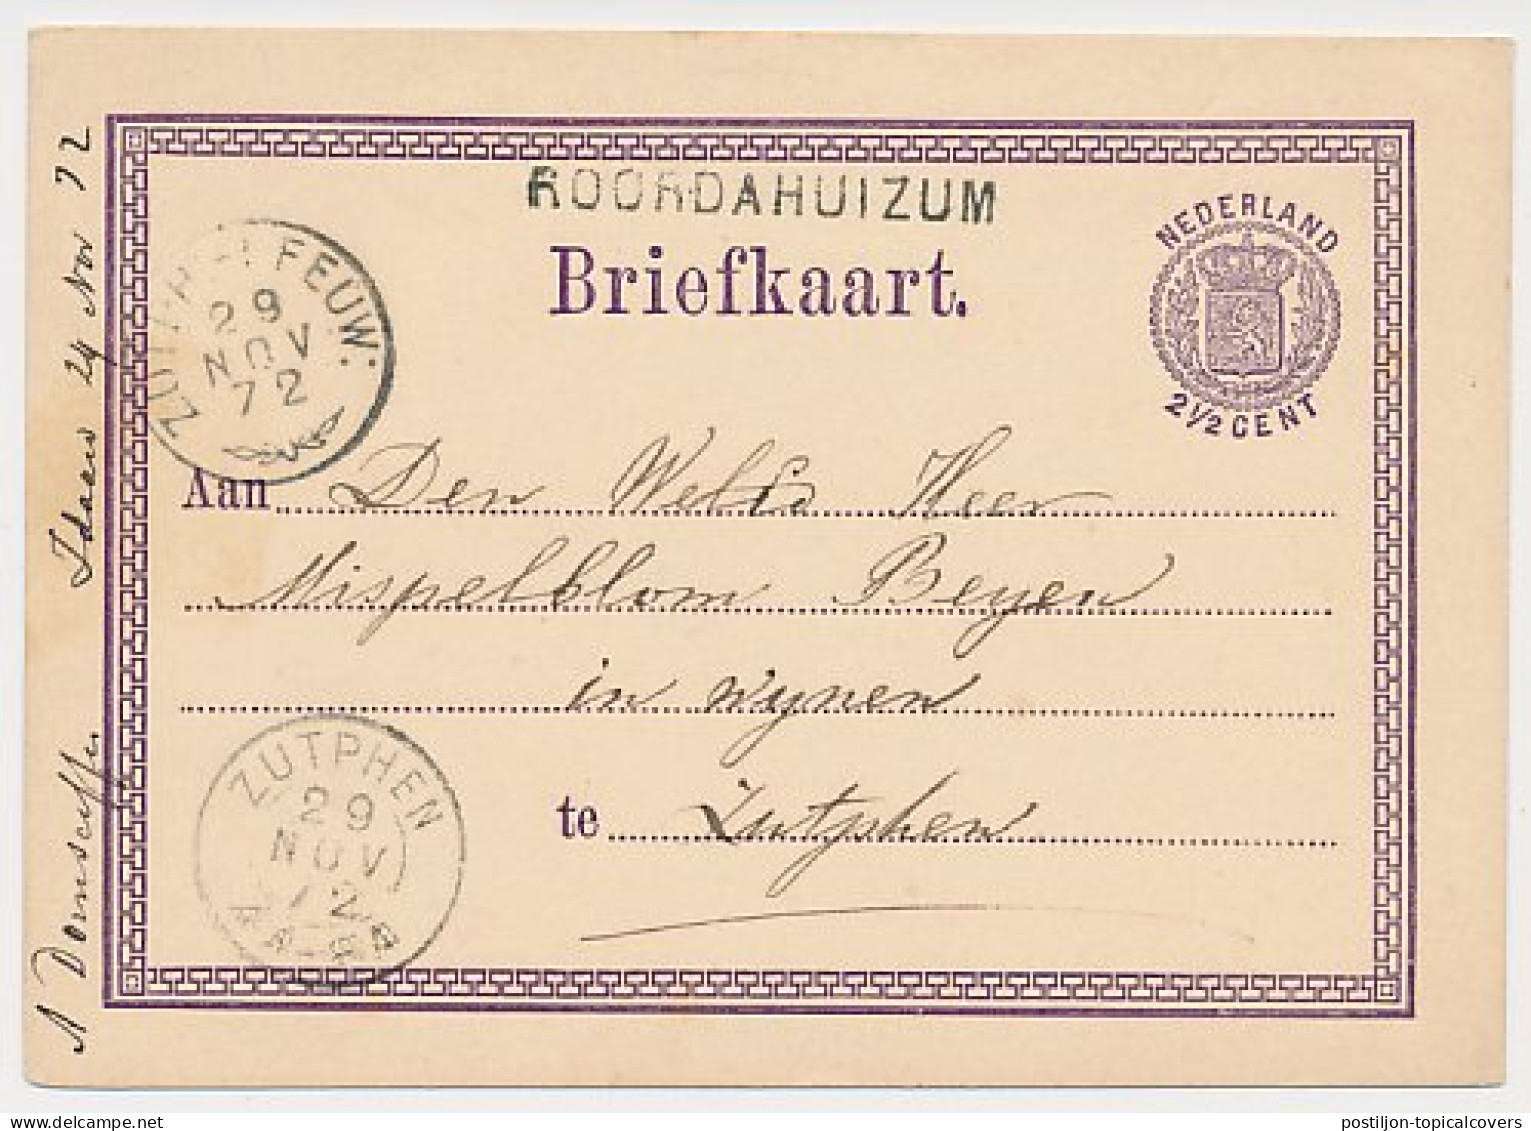 Roordahuizum - Trein Takjestempel Zutphen - Leeuwarden 1872 - Storia Postale